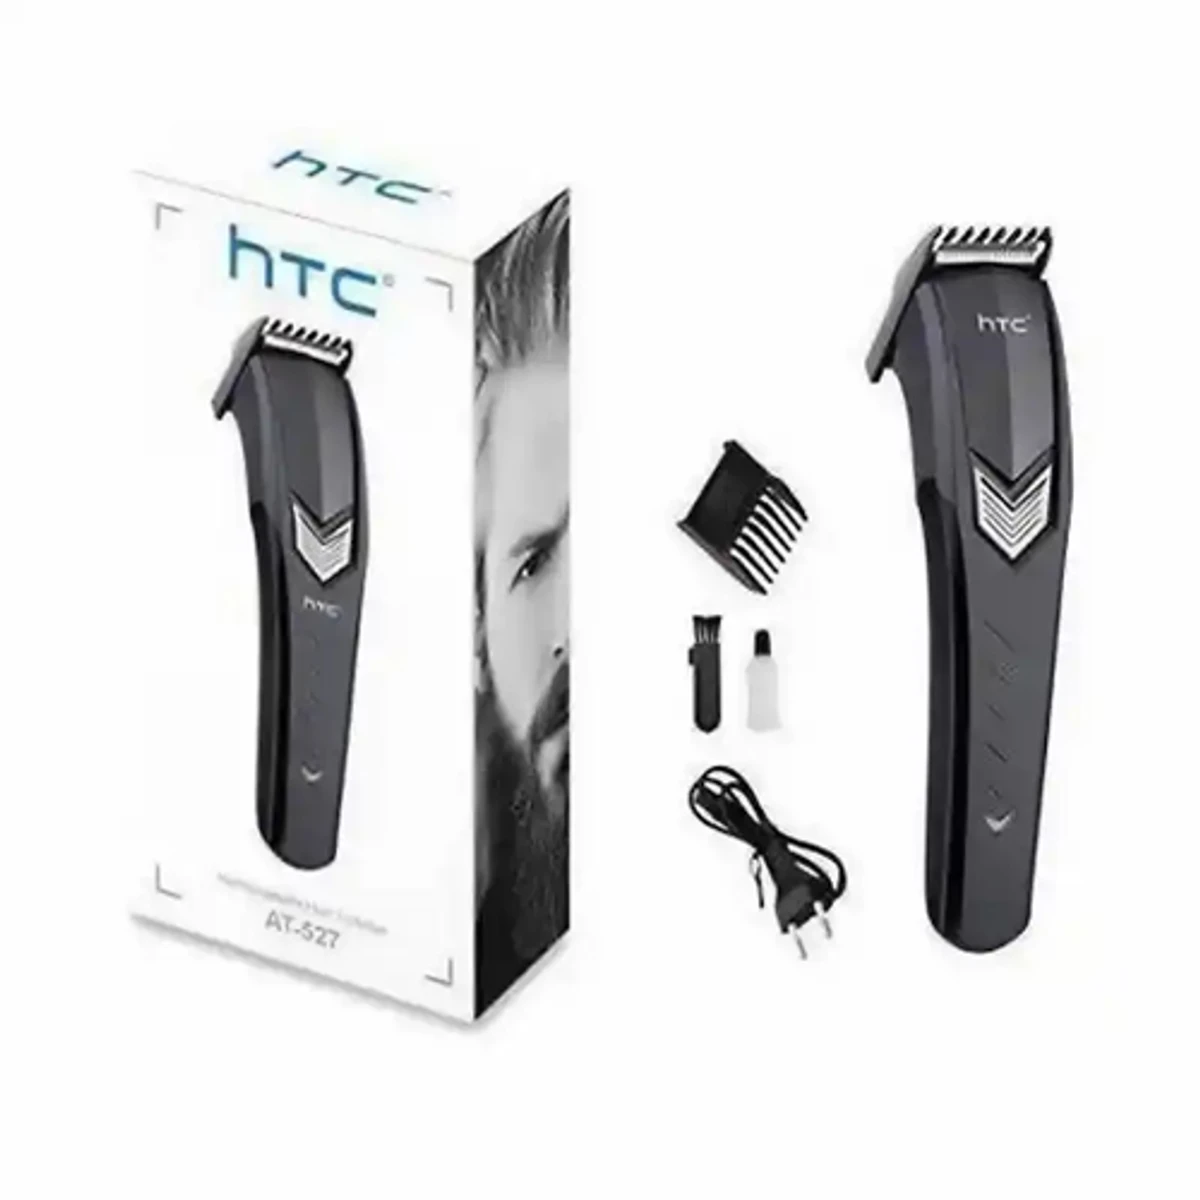 HTC AT-522 Beard Trimmer For Men